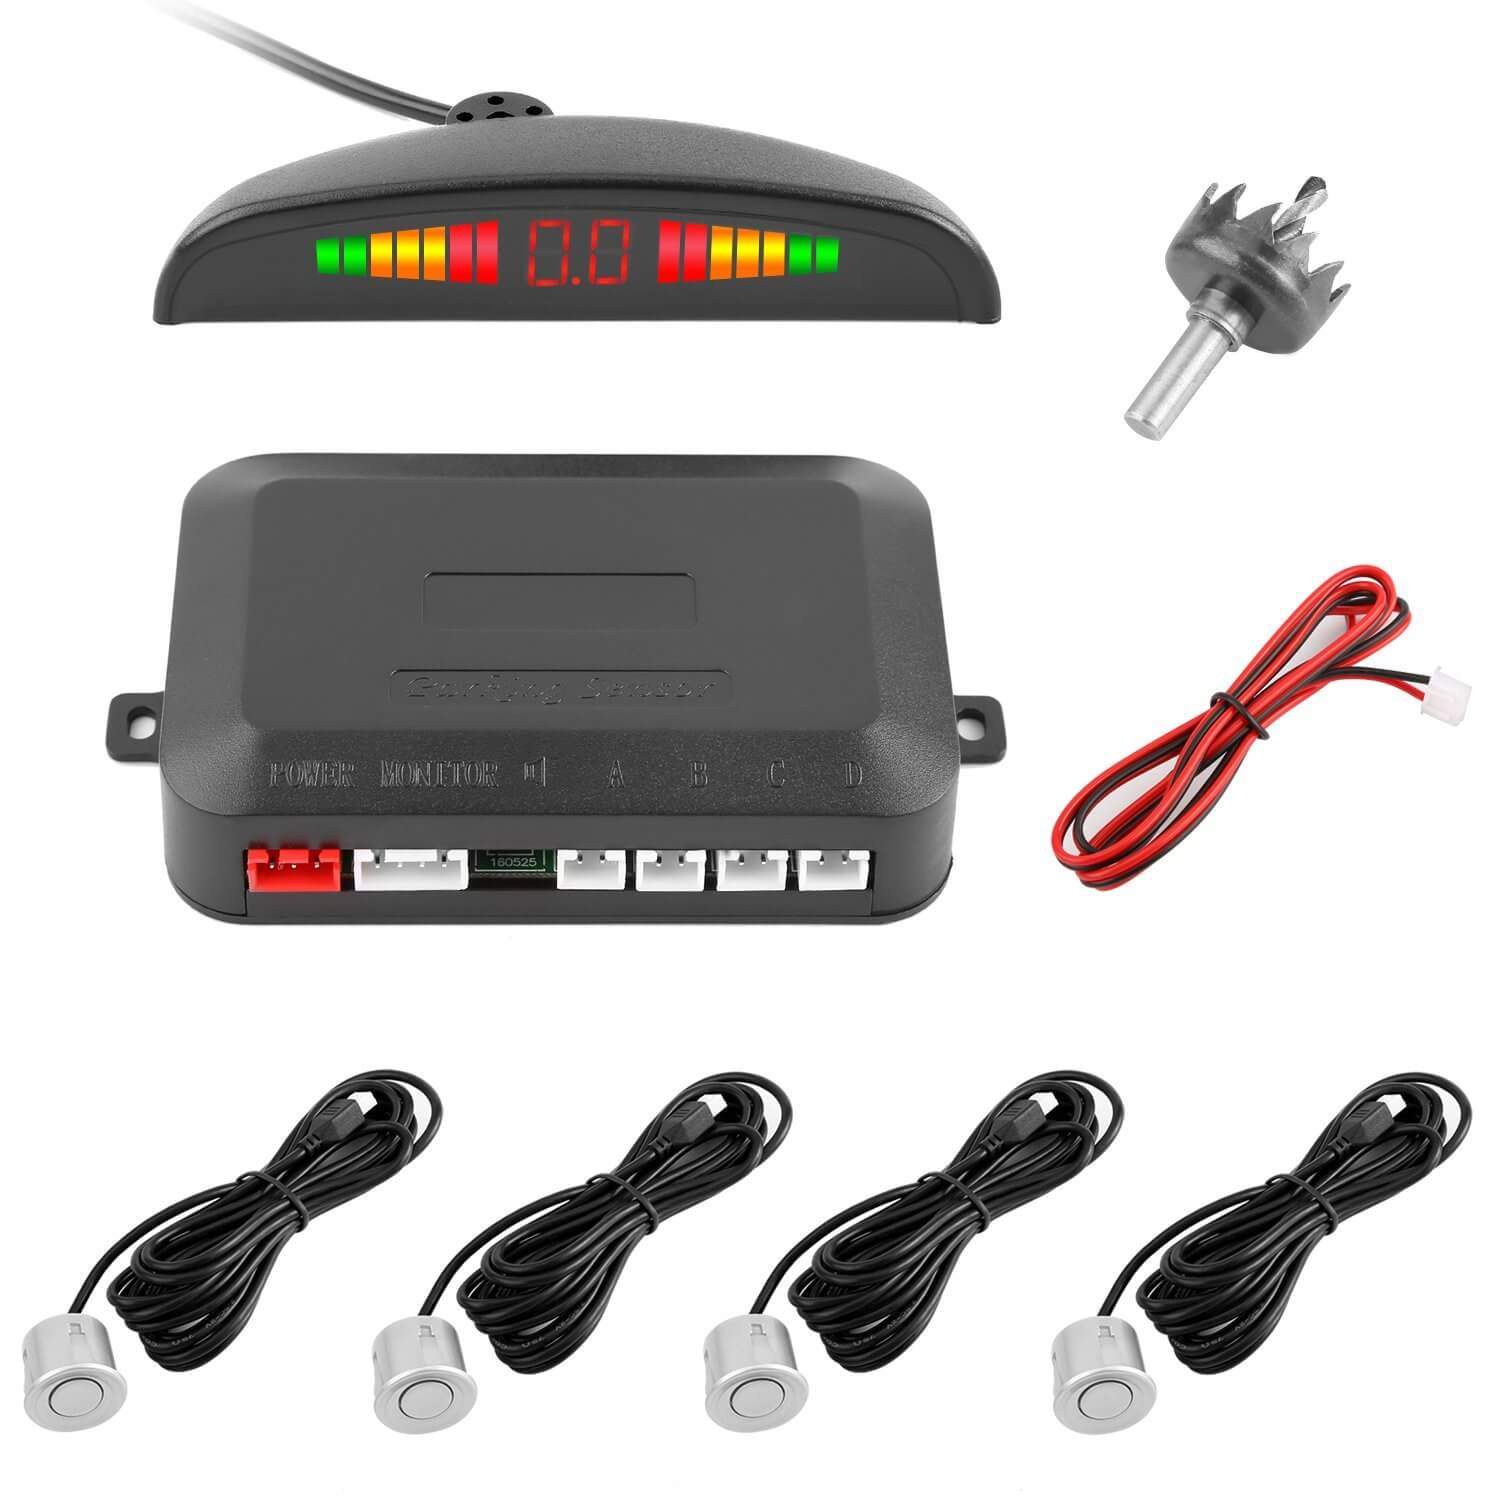 YOKKAO LED Display Auto Rear Reverse Alert System Car Parking Sensor Backup Kit